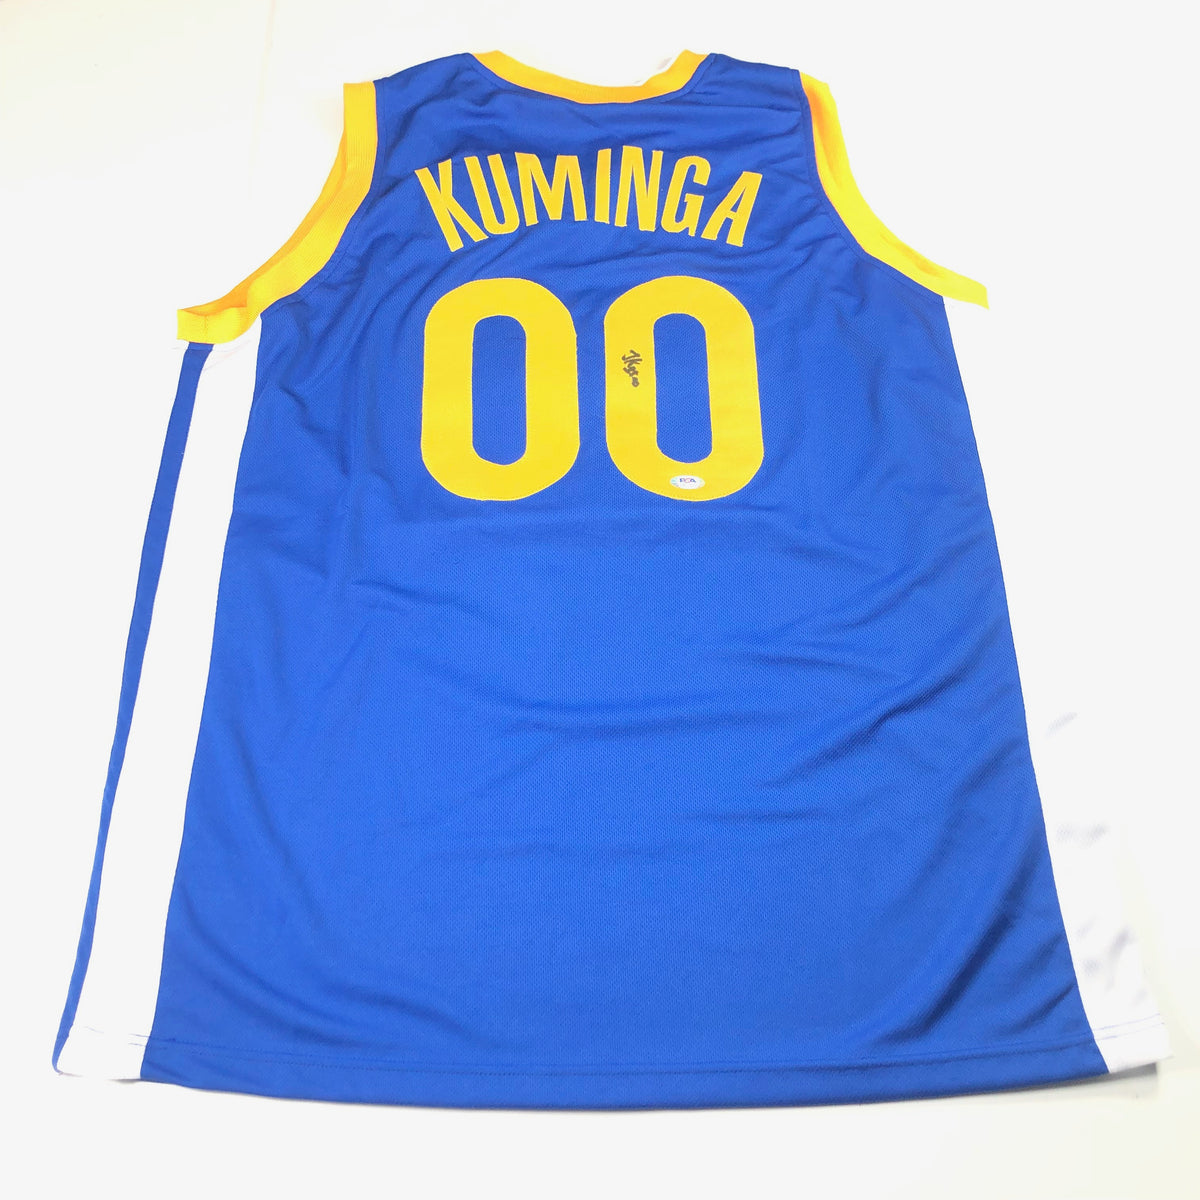 Jonathan Kuminga Golden State Warriors Autographed Blue Icon Swingman Jersey with 22 NBA Champ Inscription - Fanatics Authentic Certified